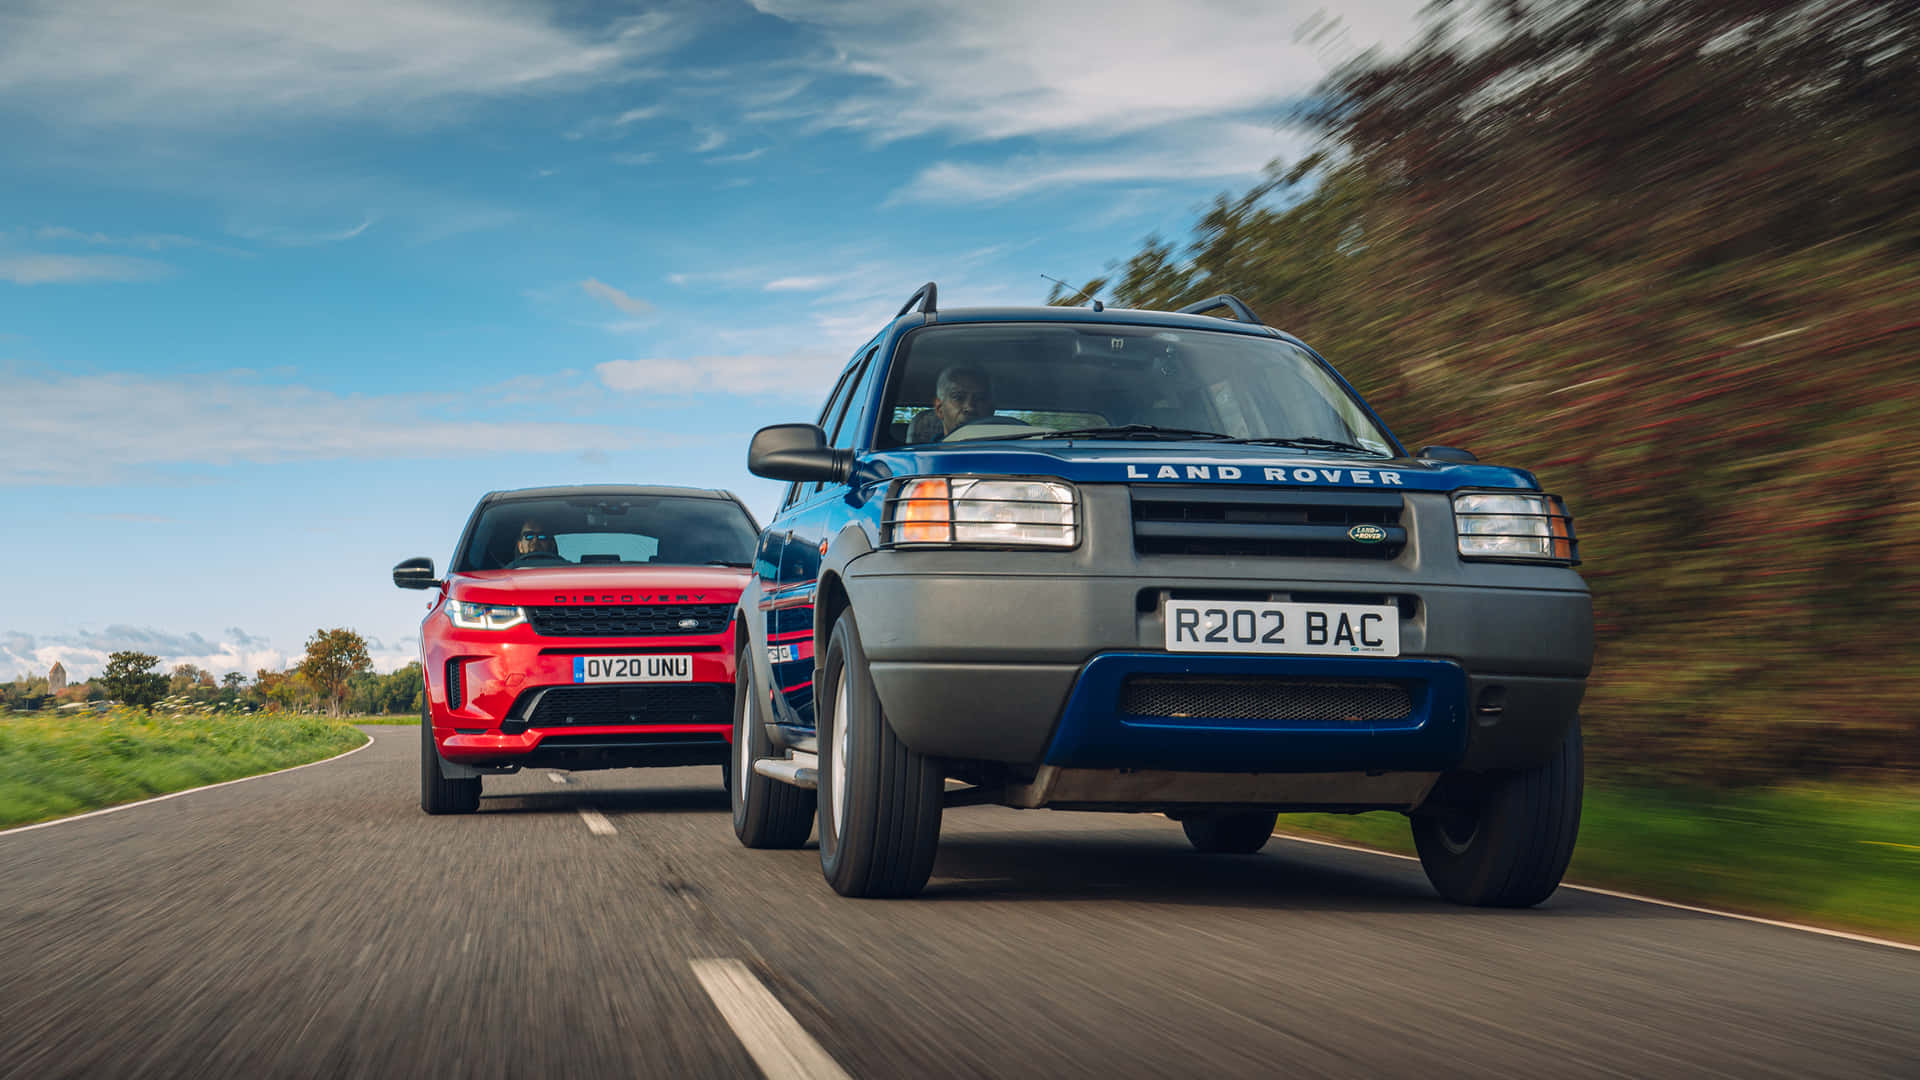 Captivating Land Rover Freelander in Action Wallpaper